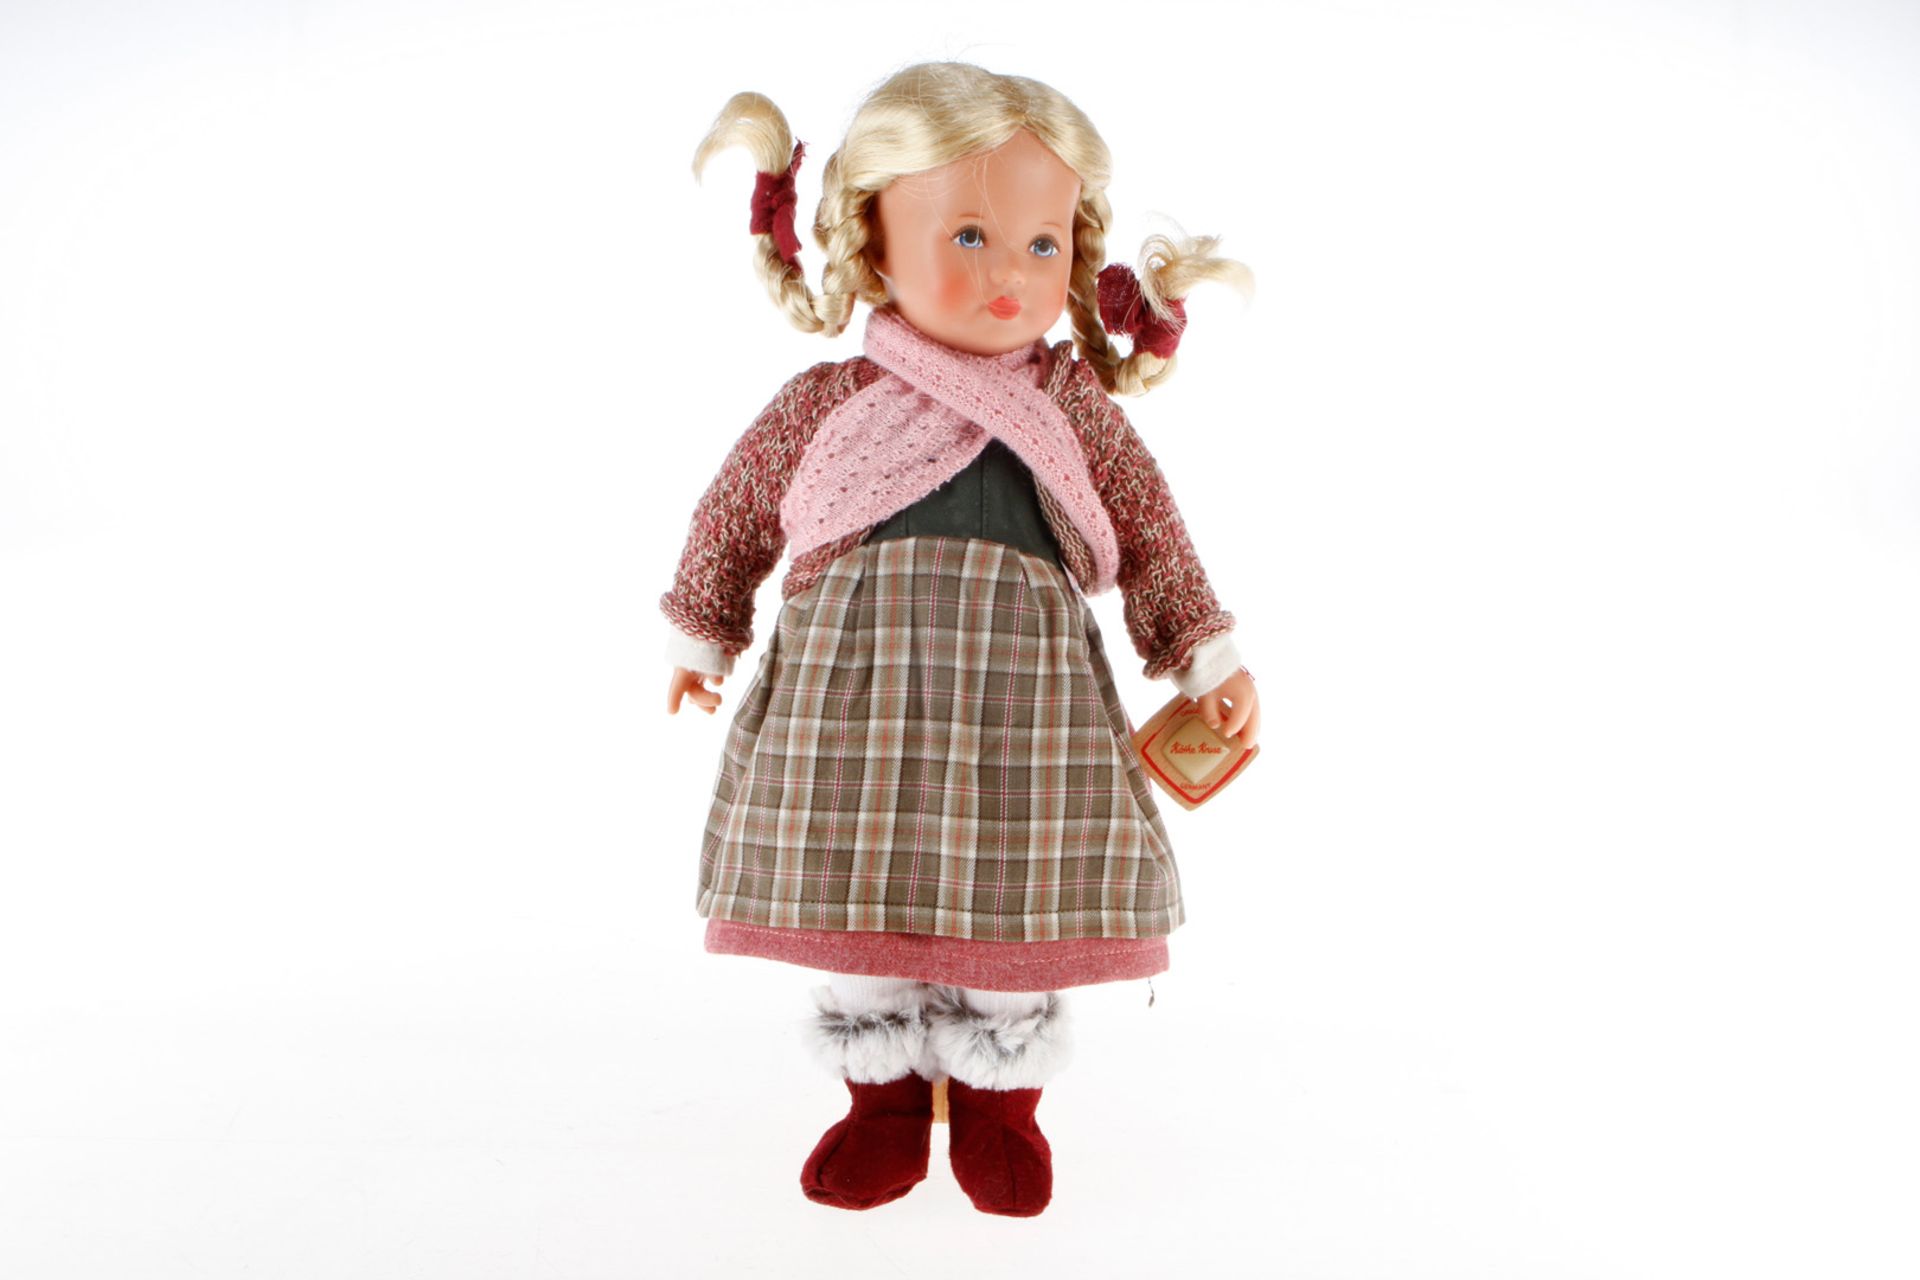 Käthe Kruse Klassik-Puppe Glückskind ”Gretel”, 2015, Alterungsspuren, H 39